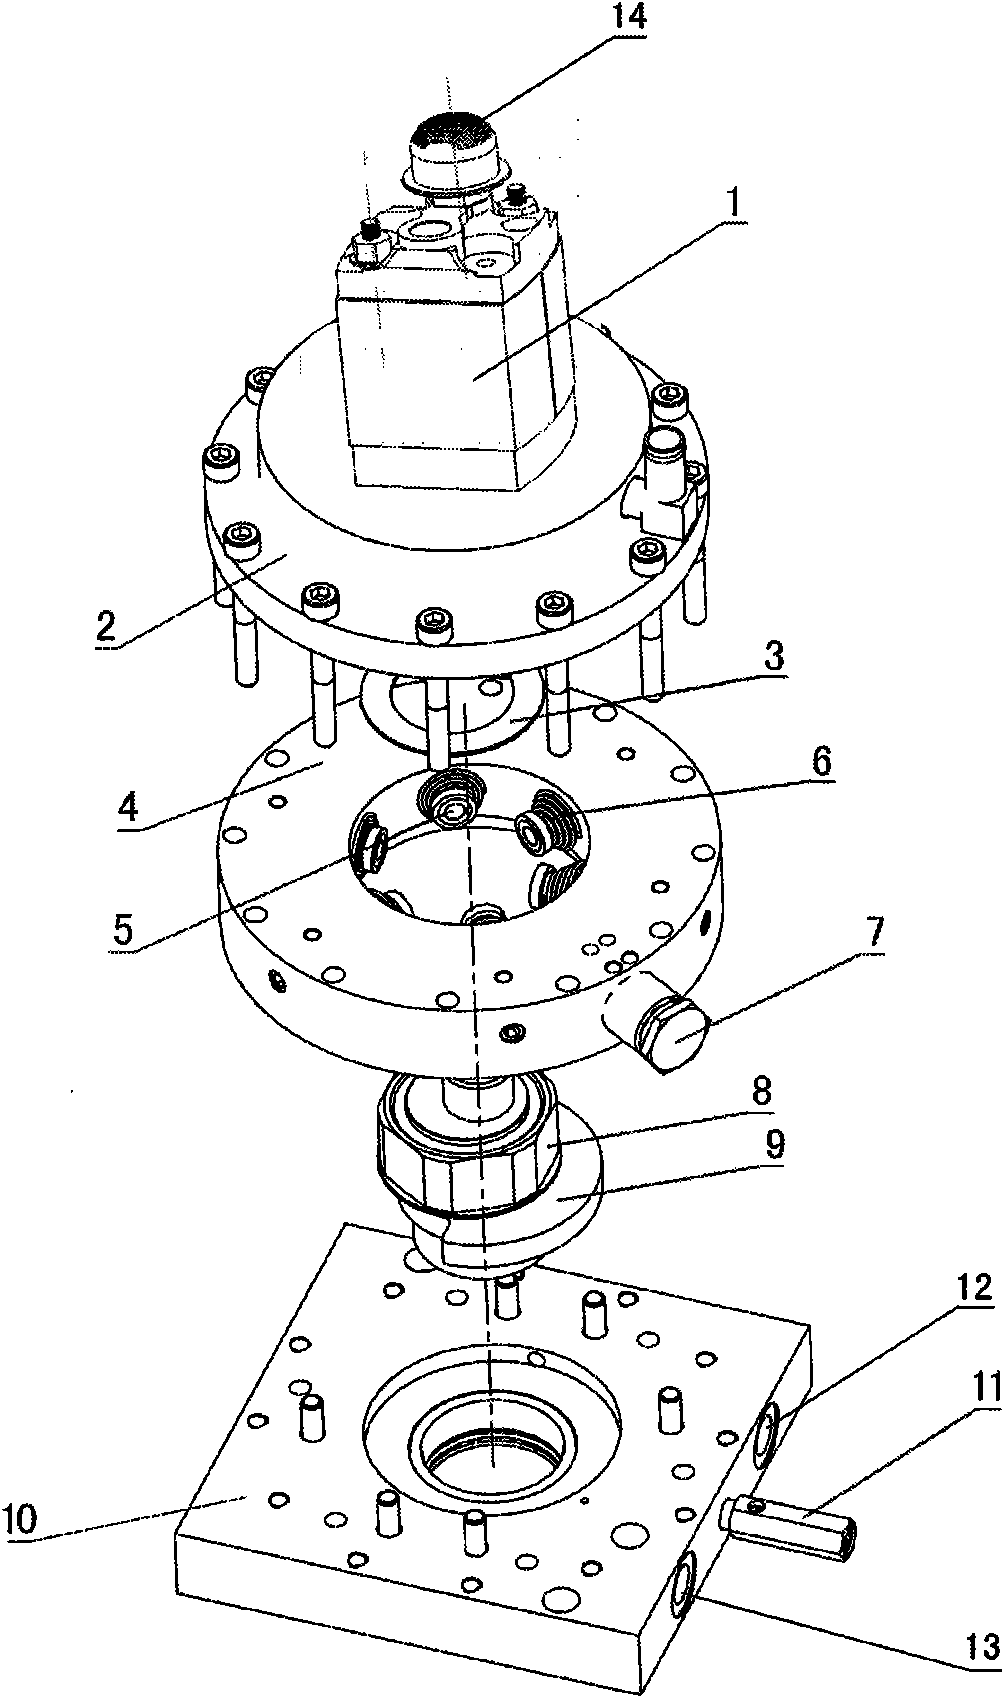 Compact high-pressure plunger pump